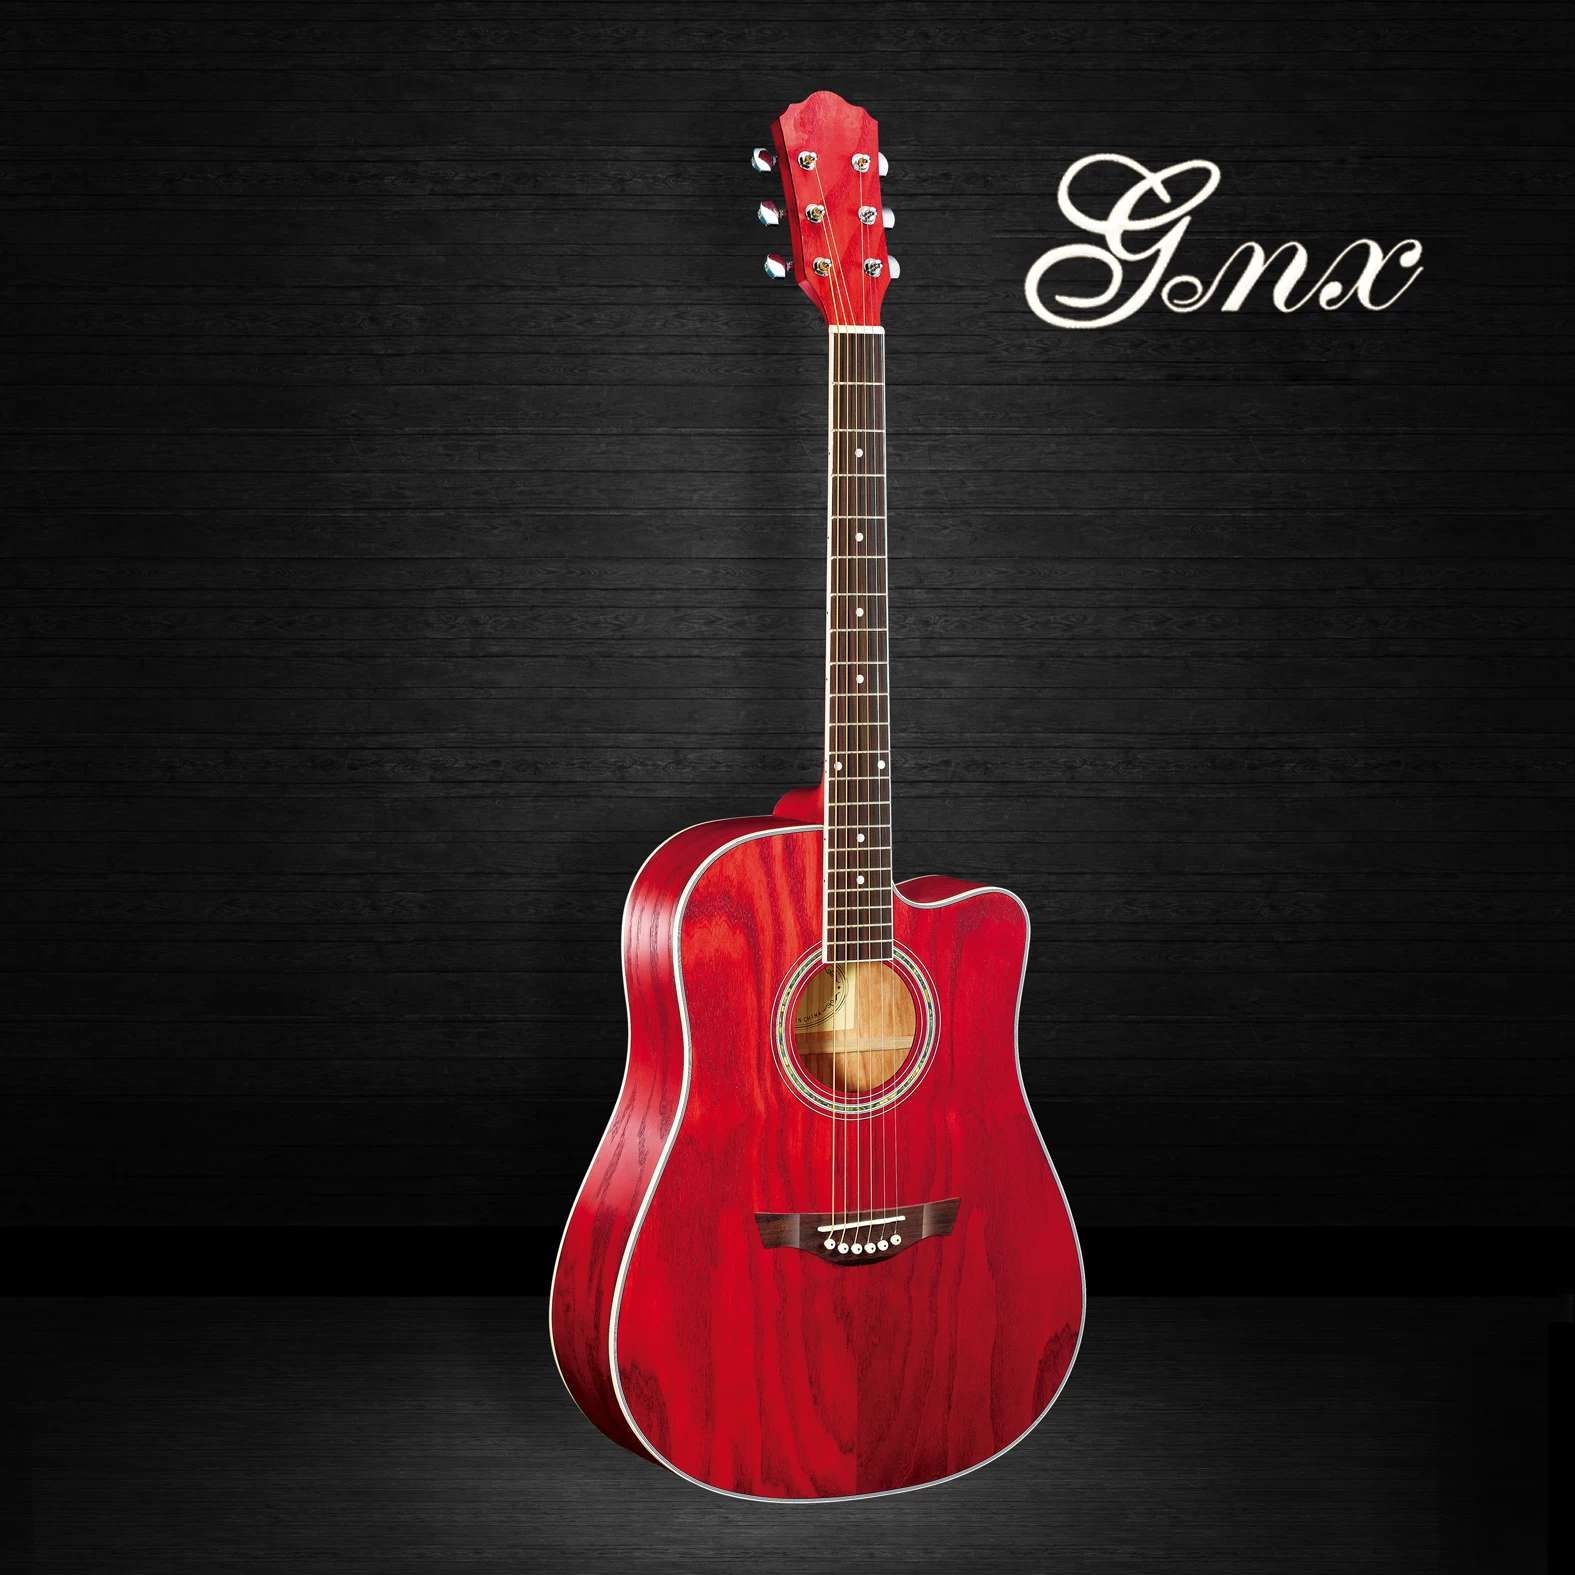 China Großhandel Musikinstrumente Akustik Sperrholz Gitarre Günstige Preis Hersteller